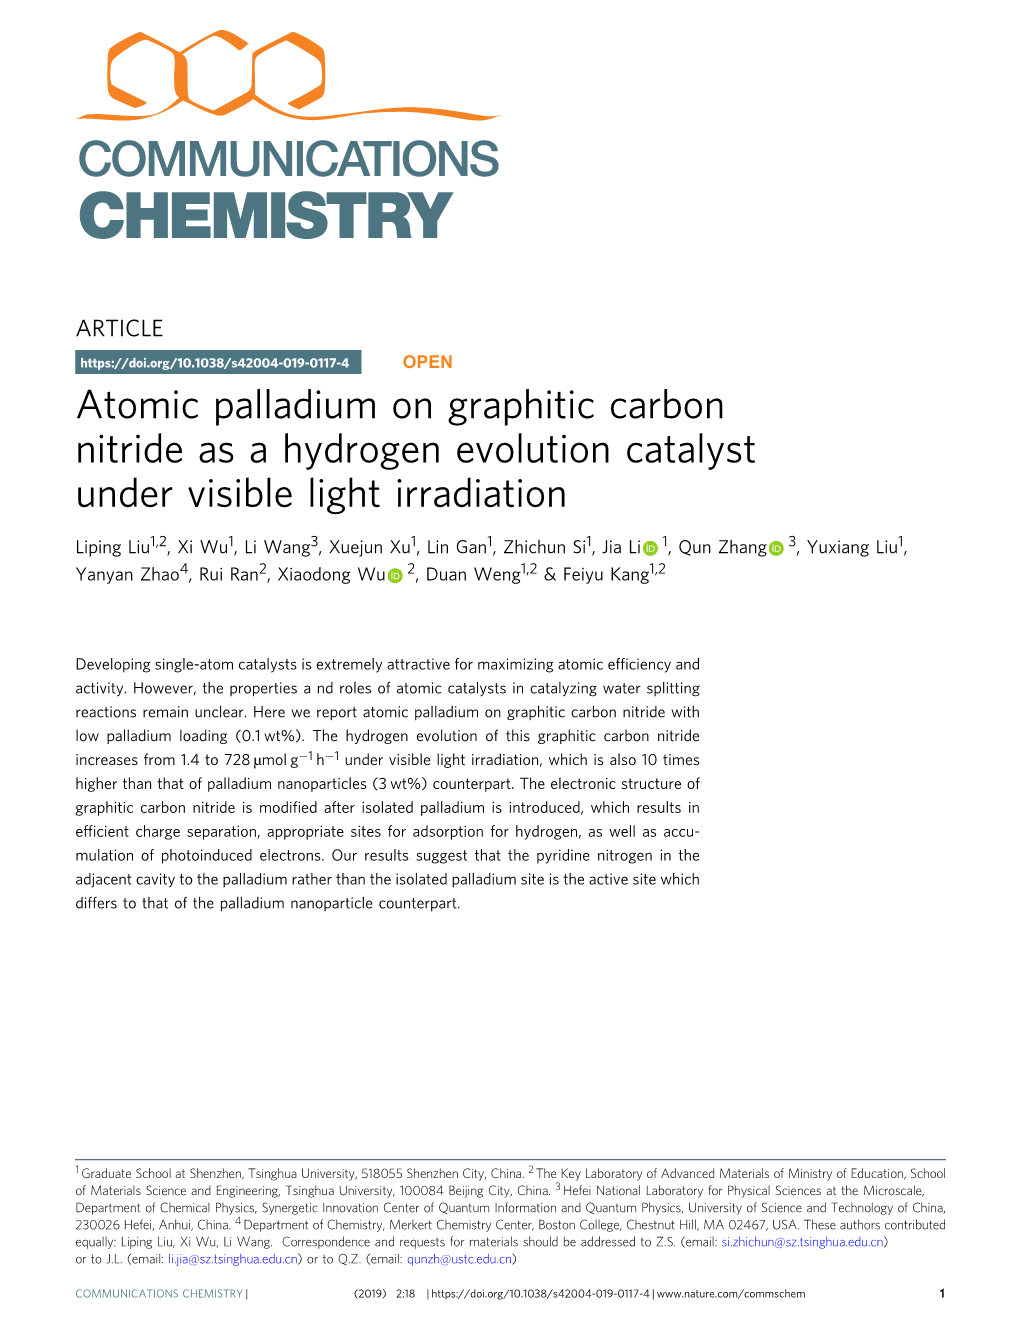 Atomic Palladium on Graphitic Carbon Nitride As a Hydrogen Evolution Catalyst Under Visible Light Irradiation